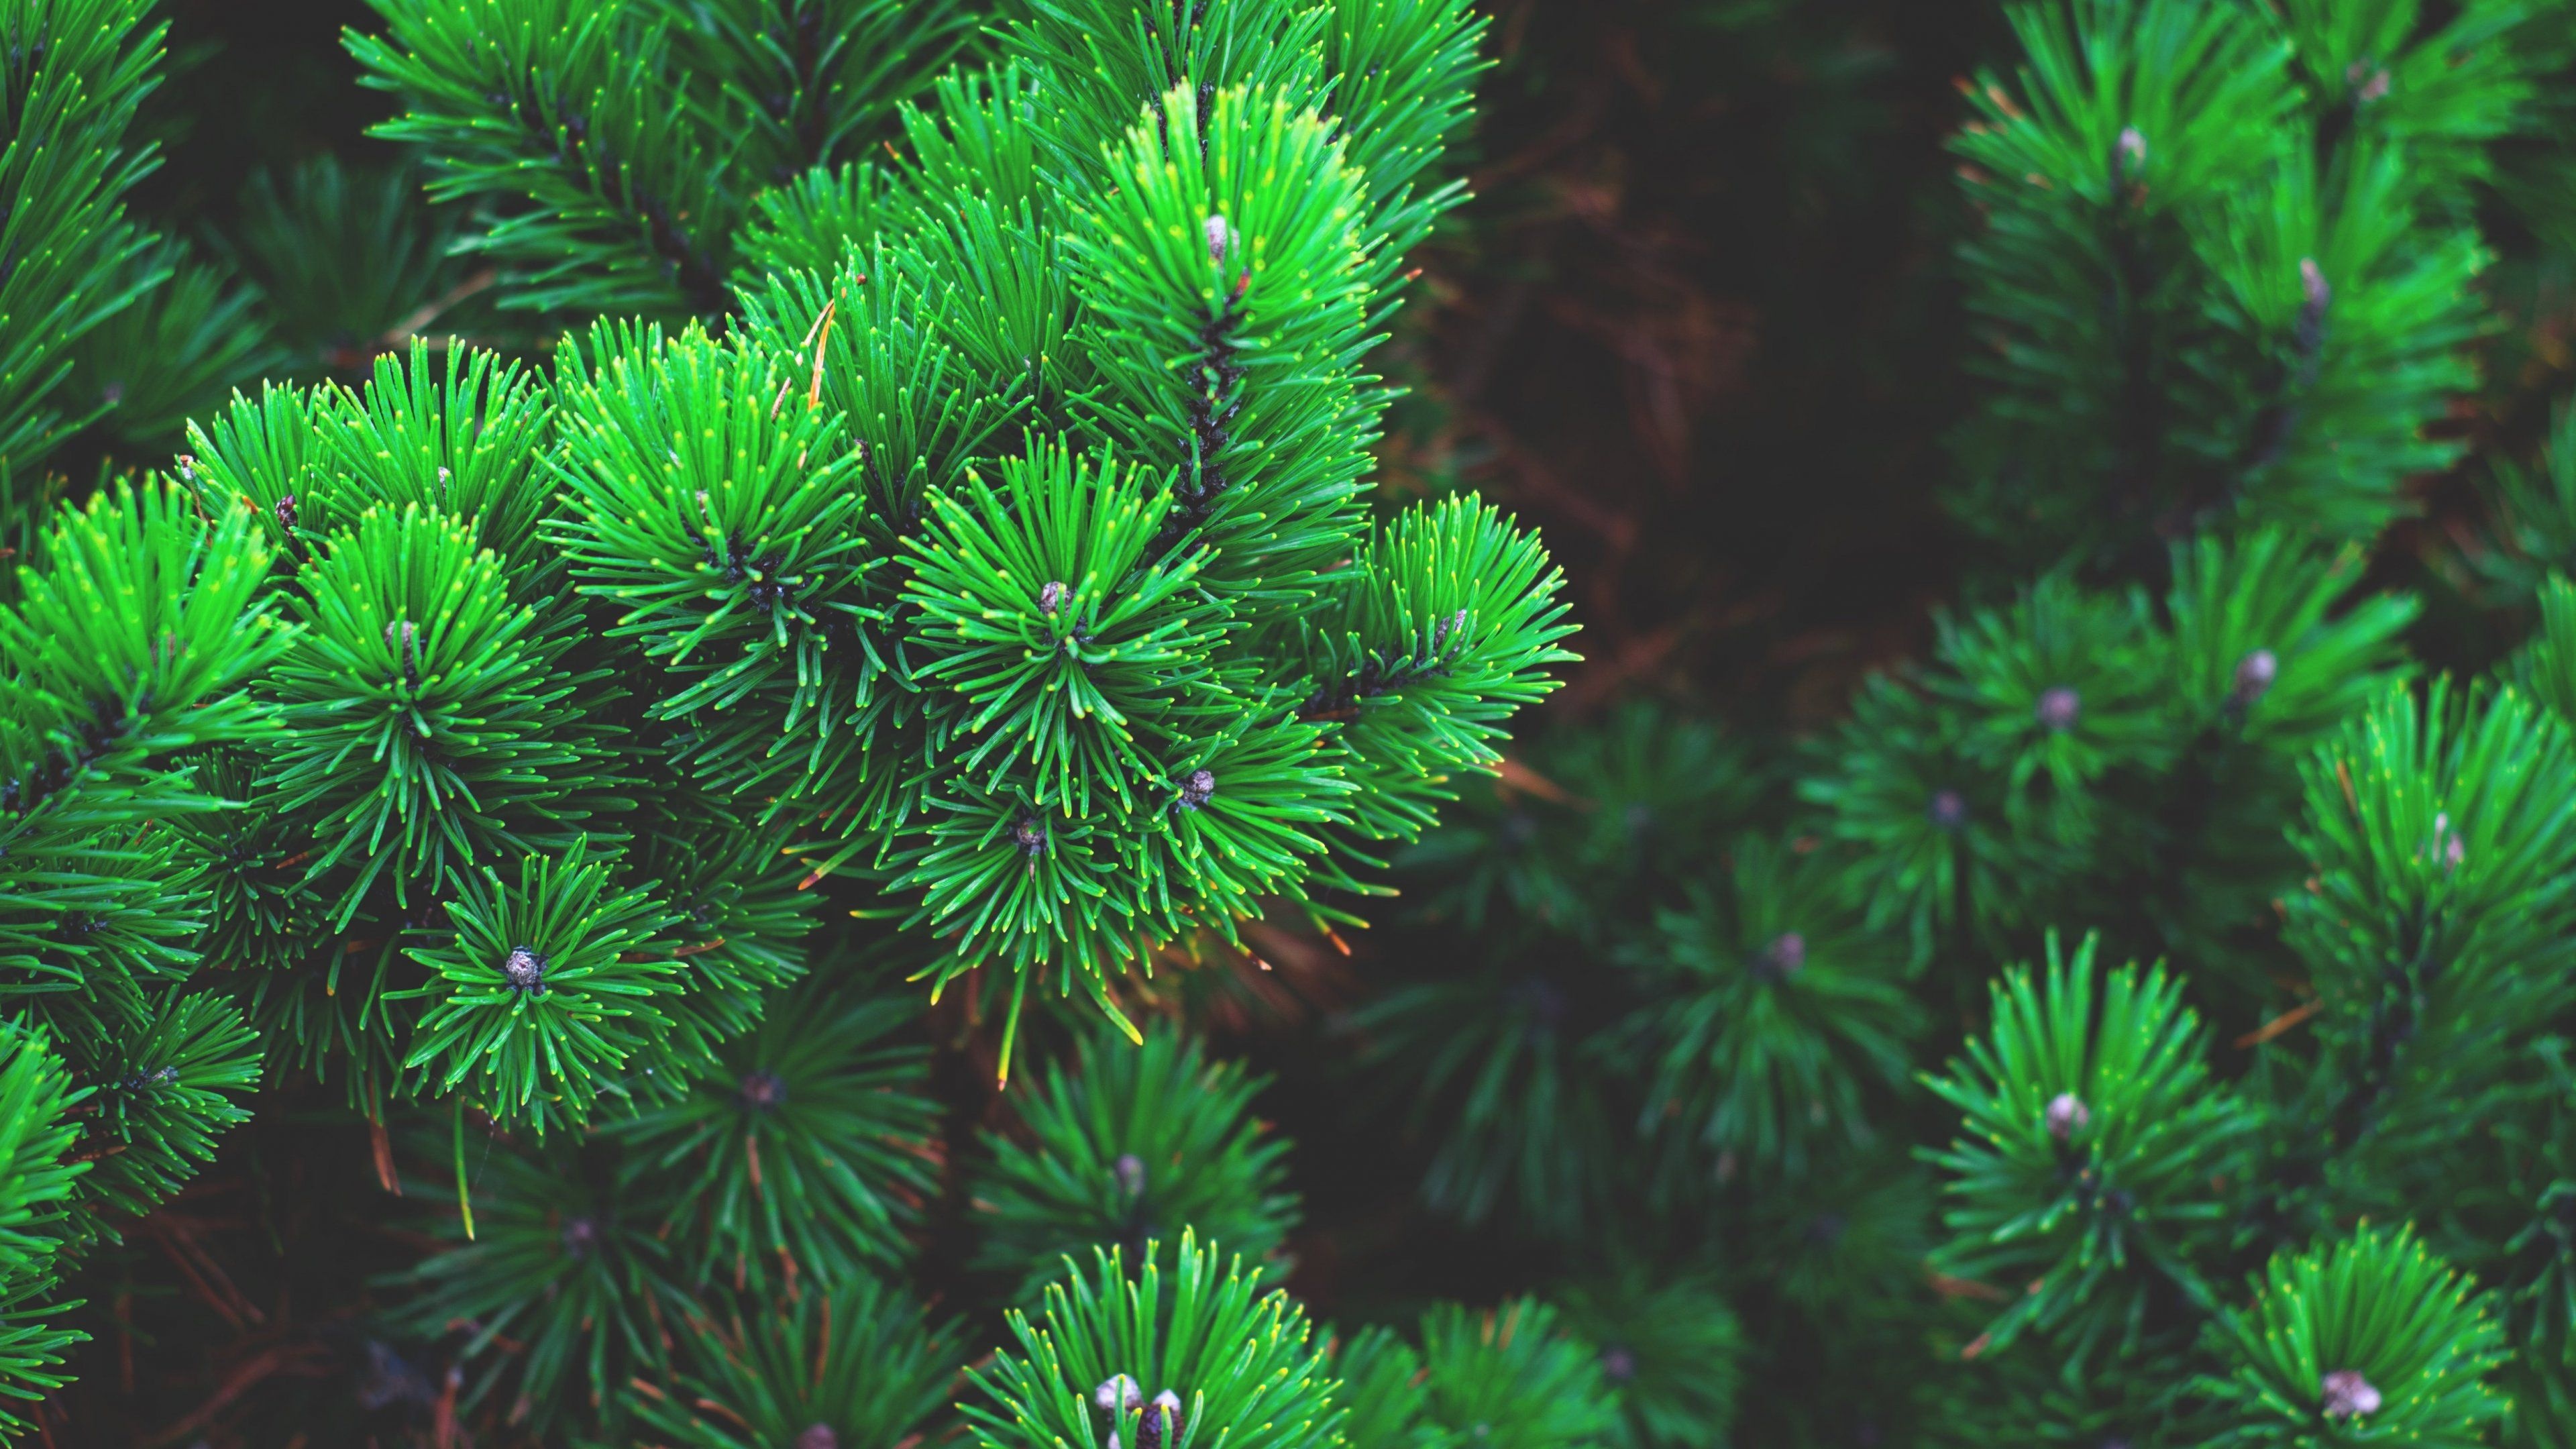 Pine green beauty, HD wallpapers, Refreshing landscapes, Nature's wonder, 3840x2160 4K Desktop